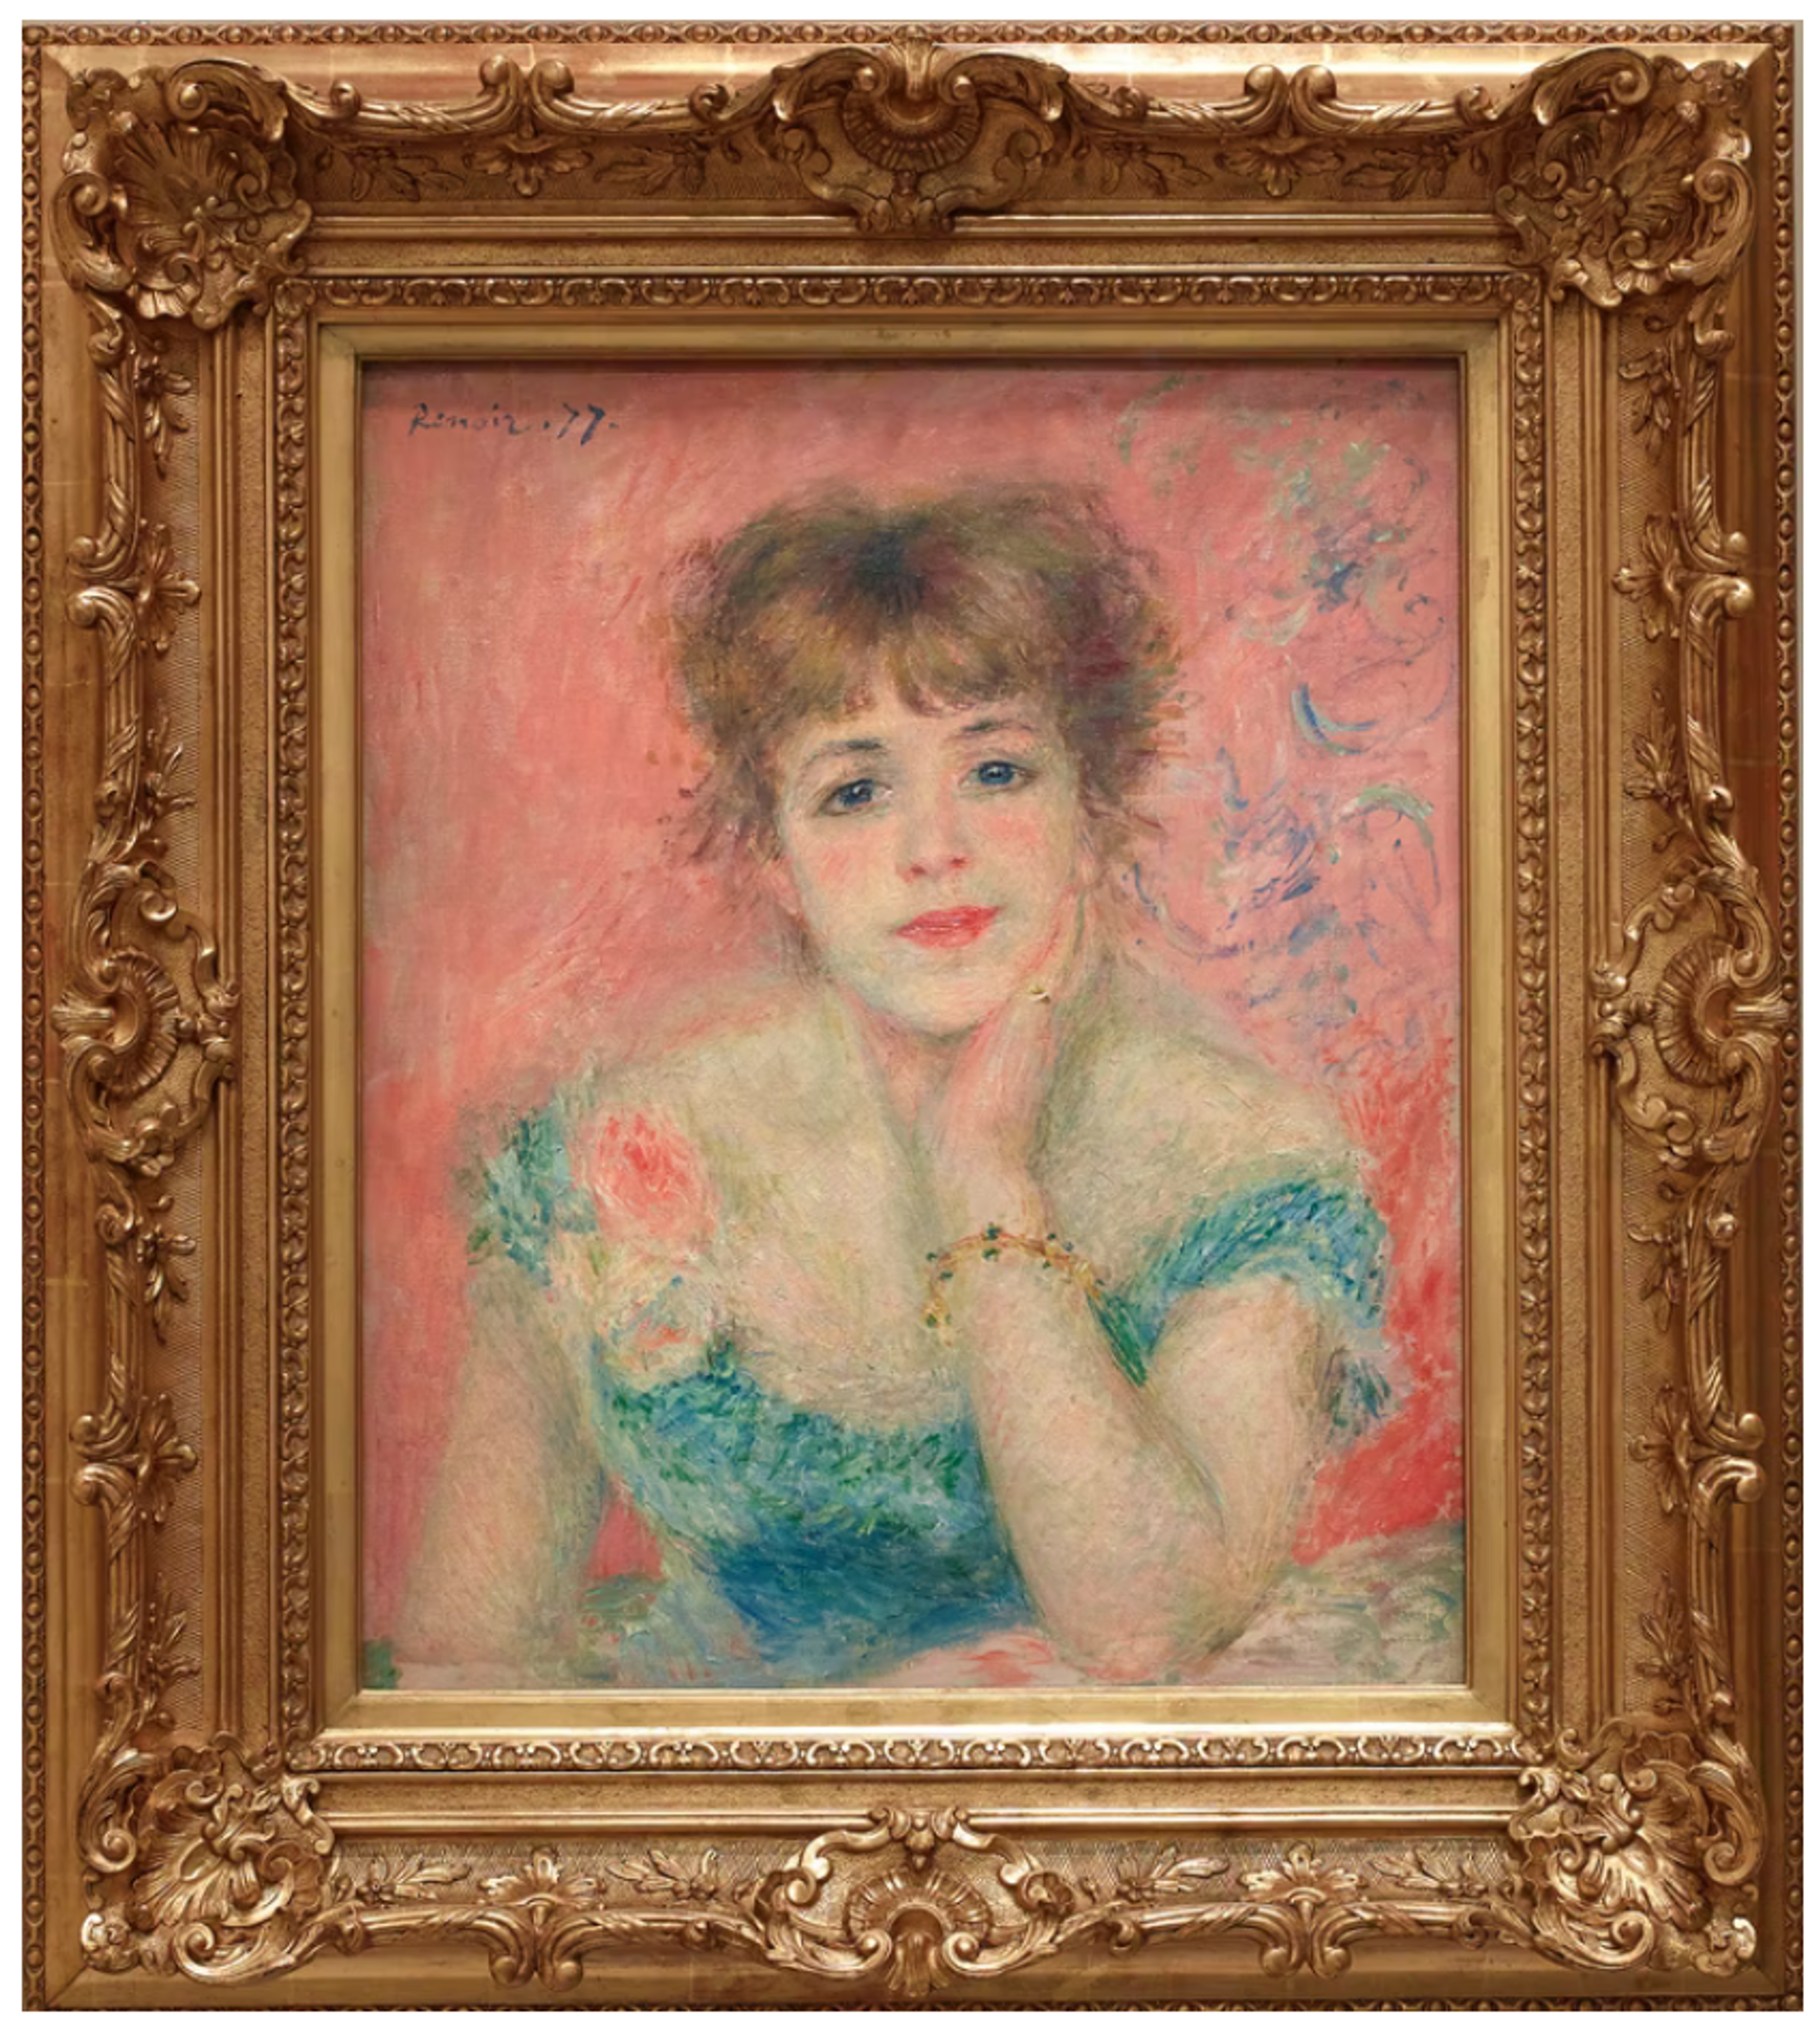 Portrait of Jeanne Samary (La Reverie) (1877) by Pierre-Auguste Renoir was part of the show at Fondation Louis Vuitton in Paris Courtesy of Pushkin Museum of Fine Arts